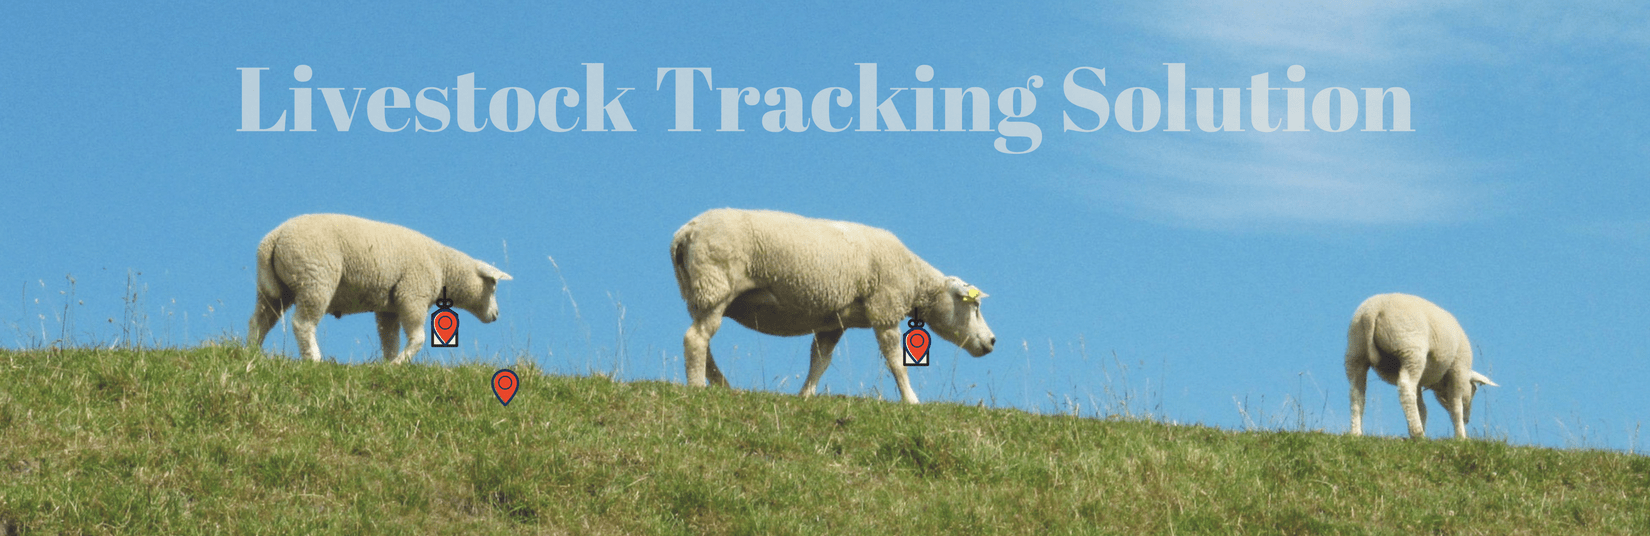 Livestock Tracking Solution